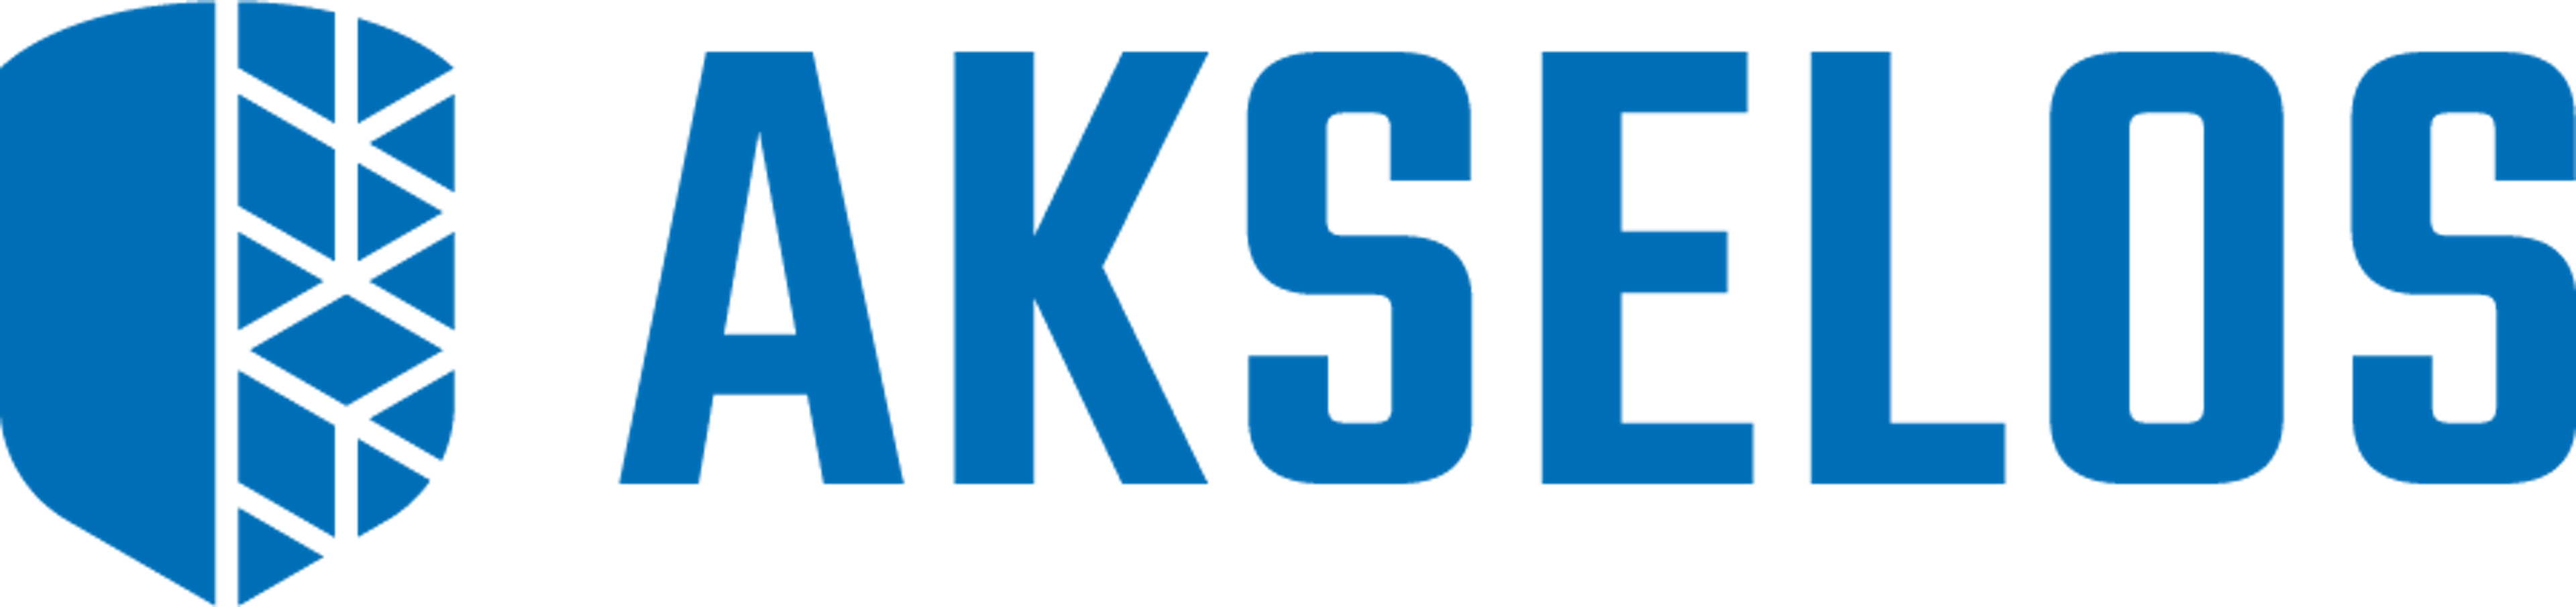 akselos logo